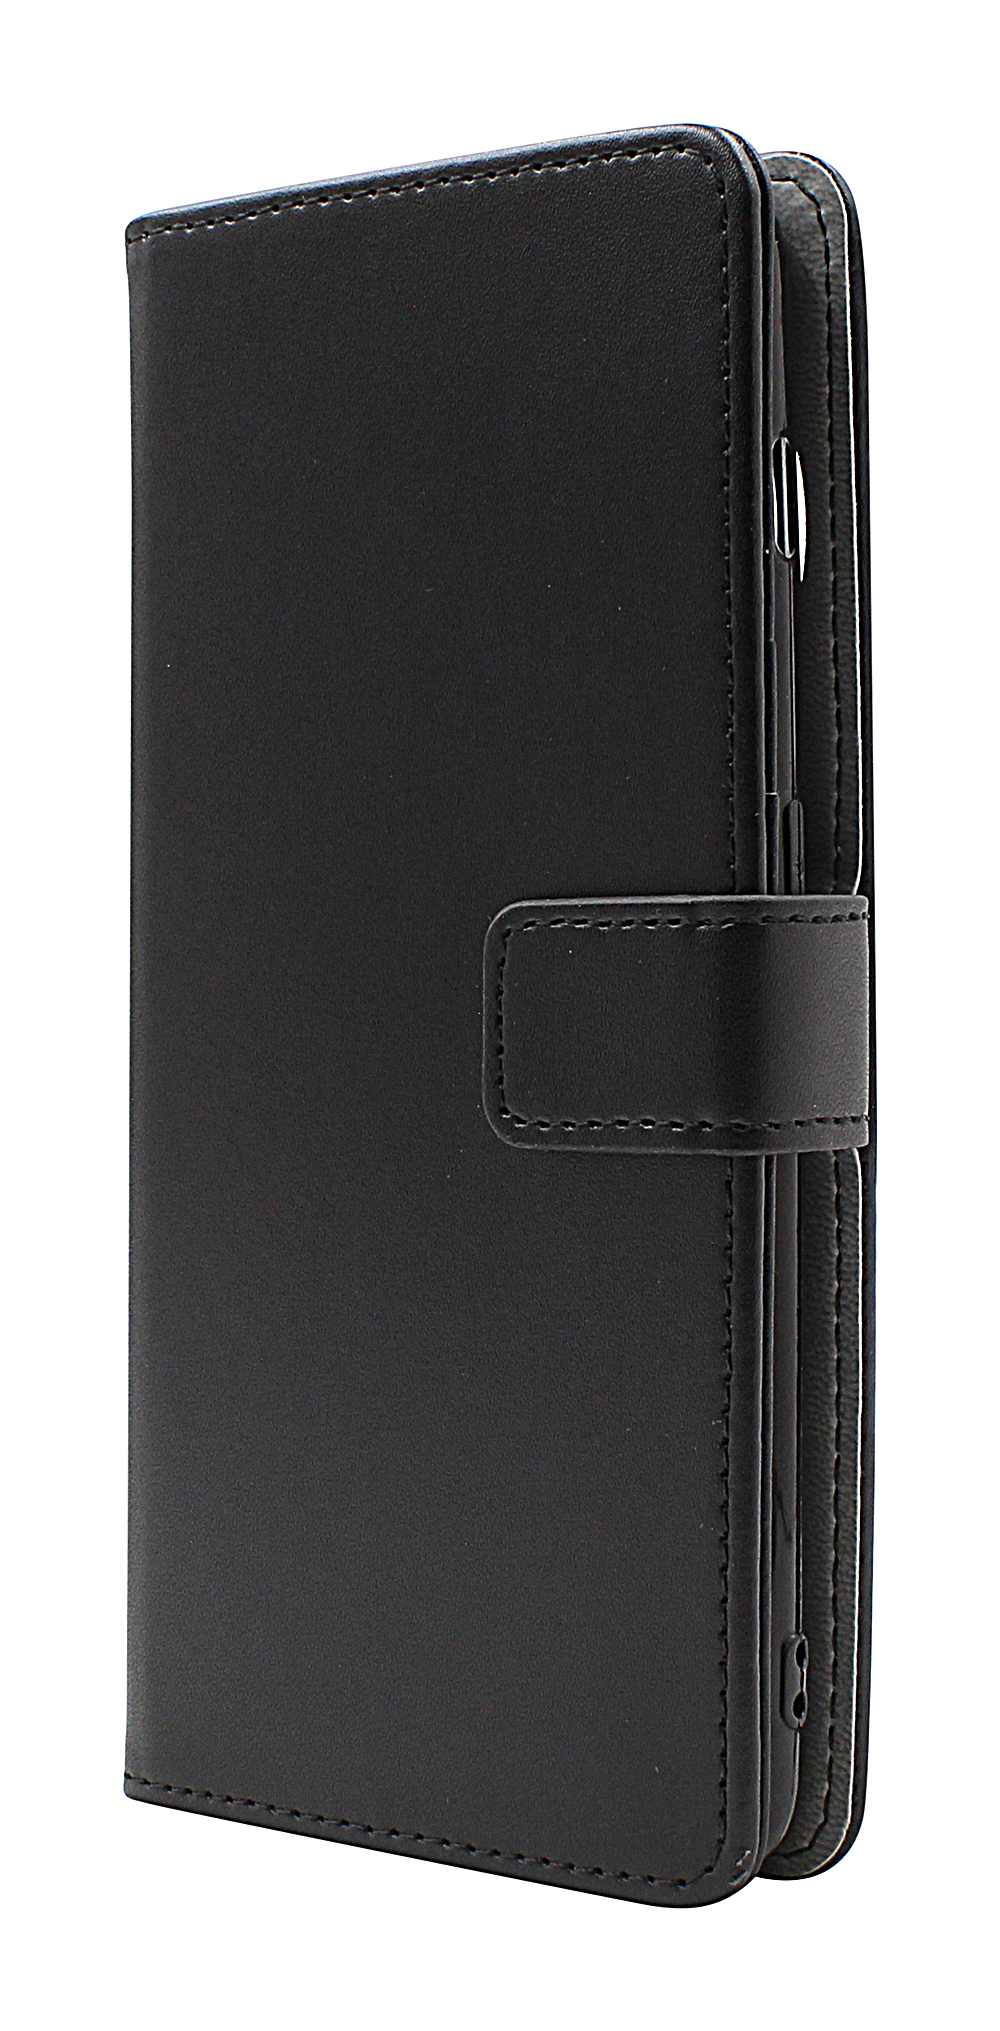 CoverInSkimblocker Magnet Fodral OnePlus 12 5G